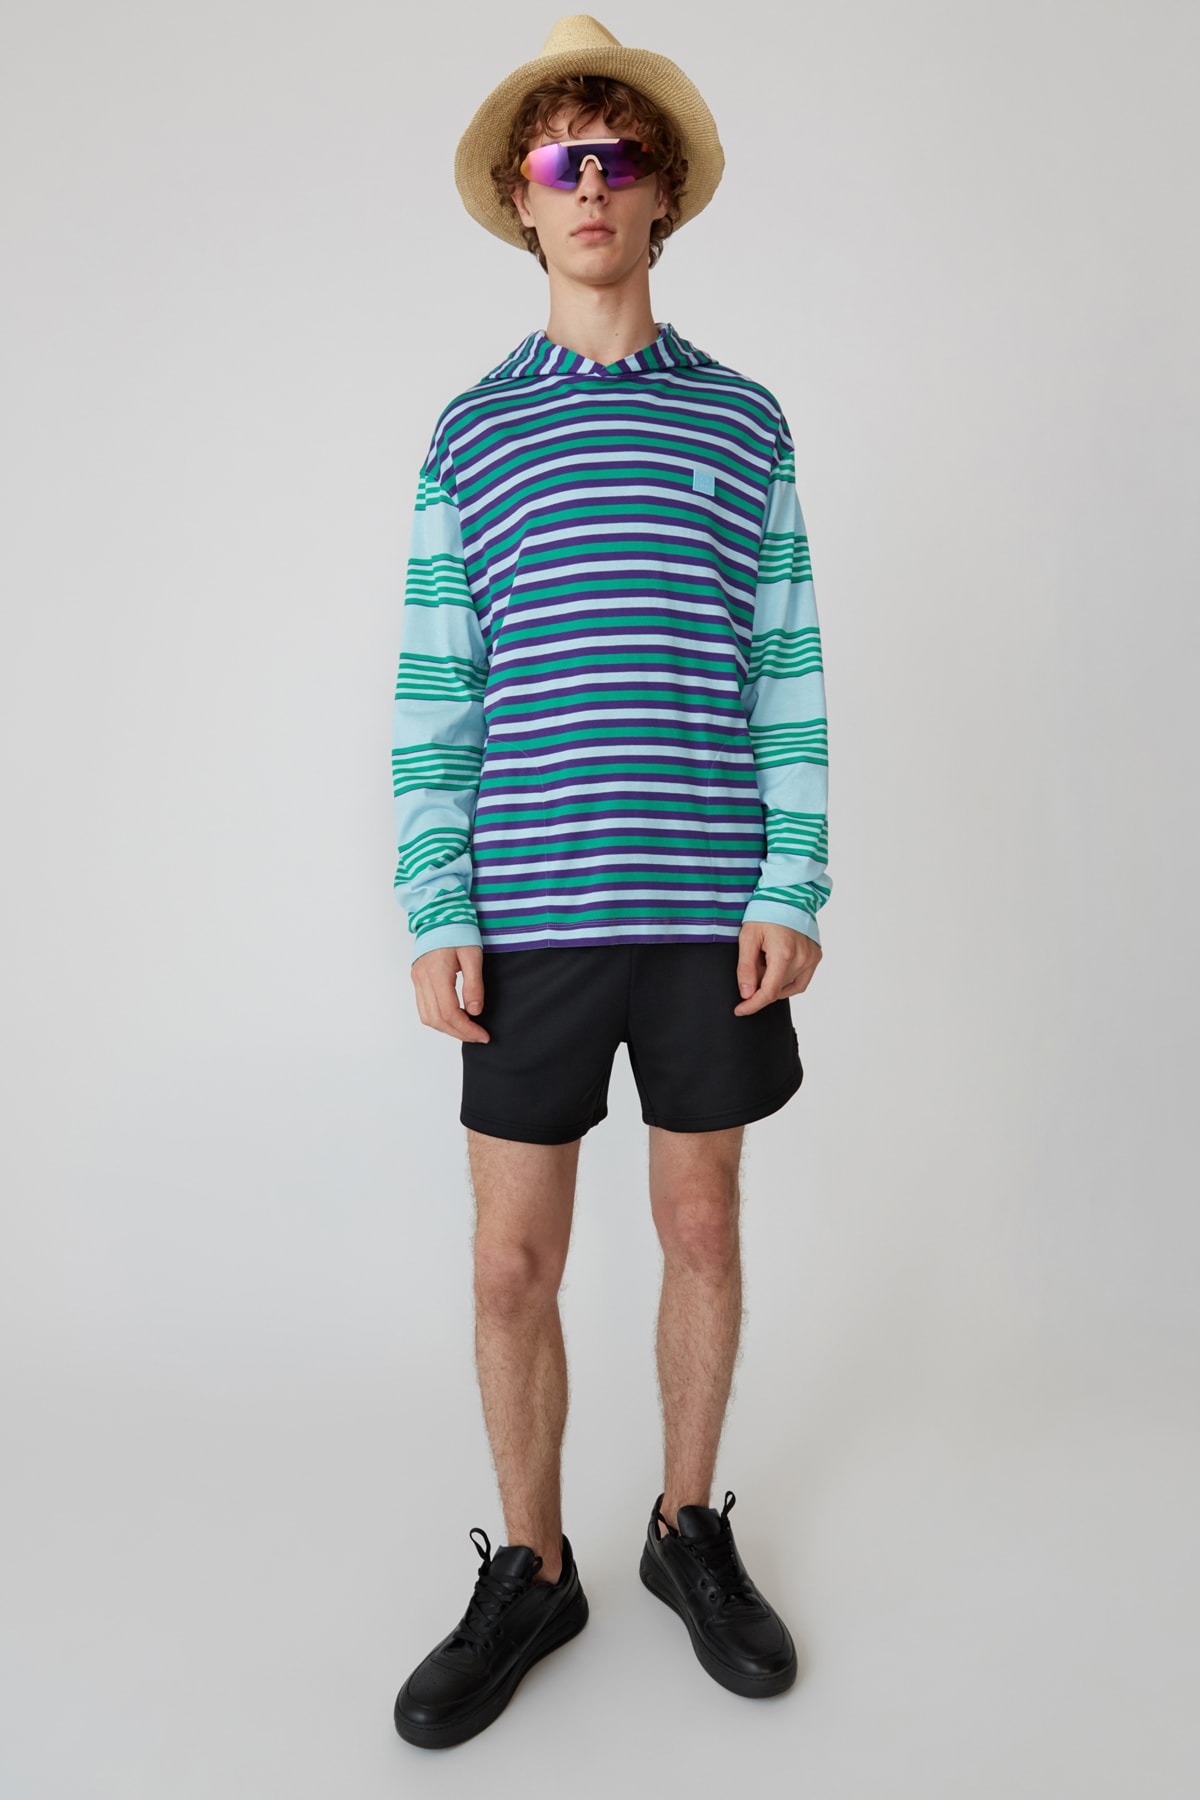 Acne Studios Spring/Summer 2019 Face Collection Striped Shirt Blue Shorts Black